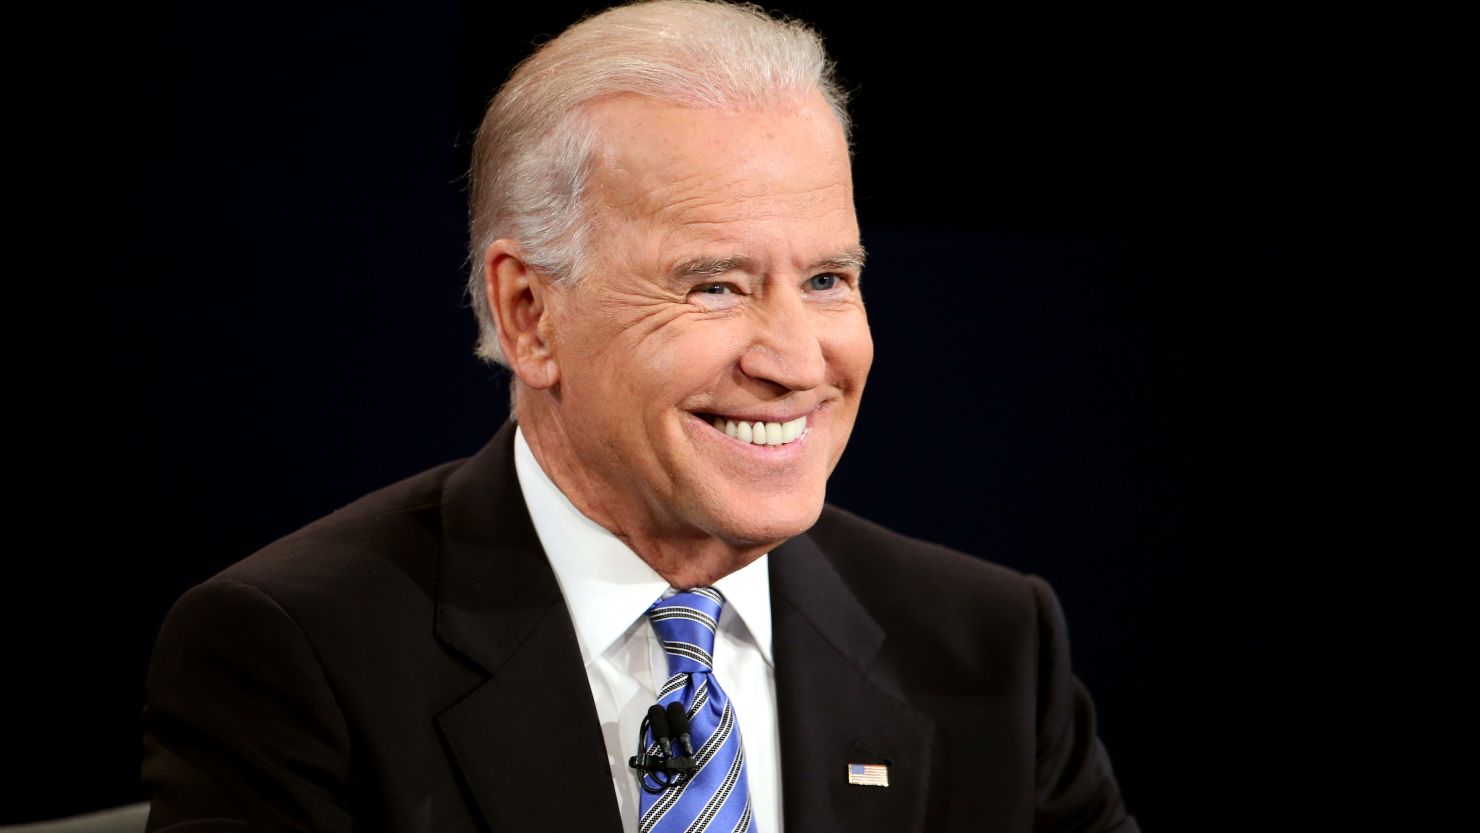 Joe Biden's expressions were a highlight of his debate with Paul Ryan on Thursday, says Dean Obeidallah.